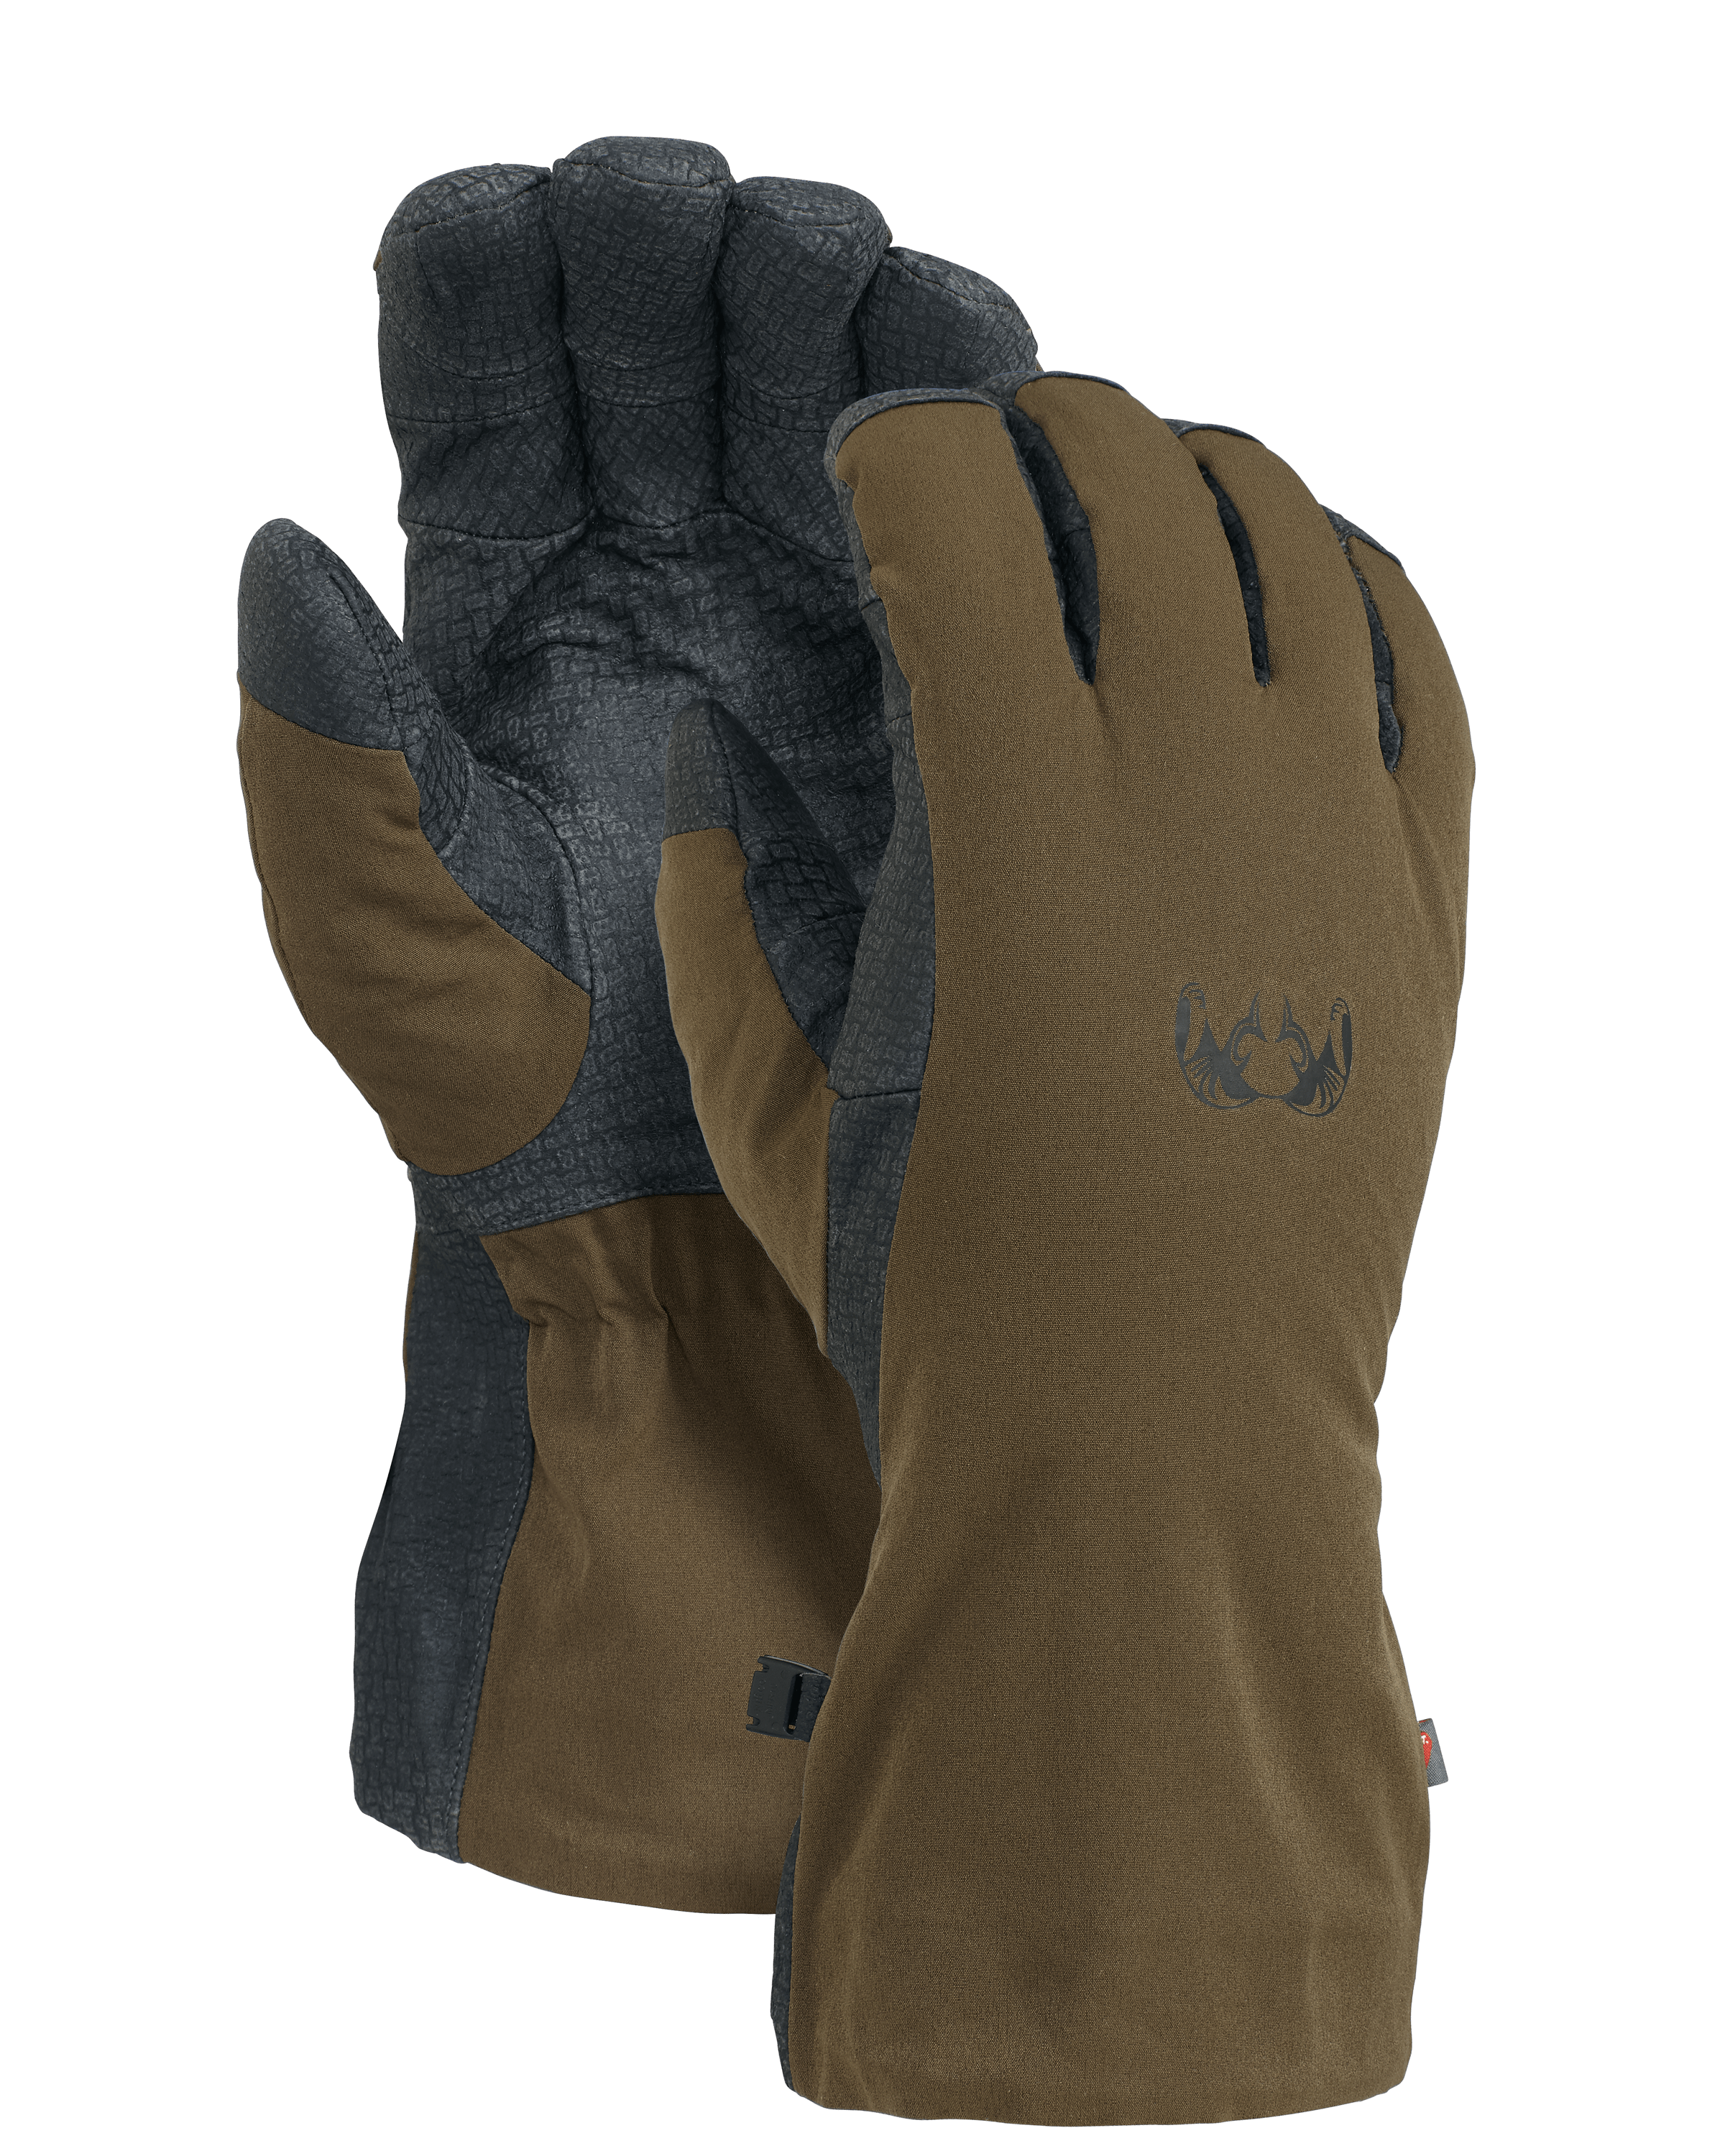 KUIU Northstar Hunting Glove in Bourbon | Size 2XL